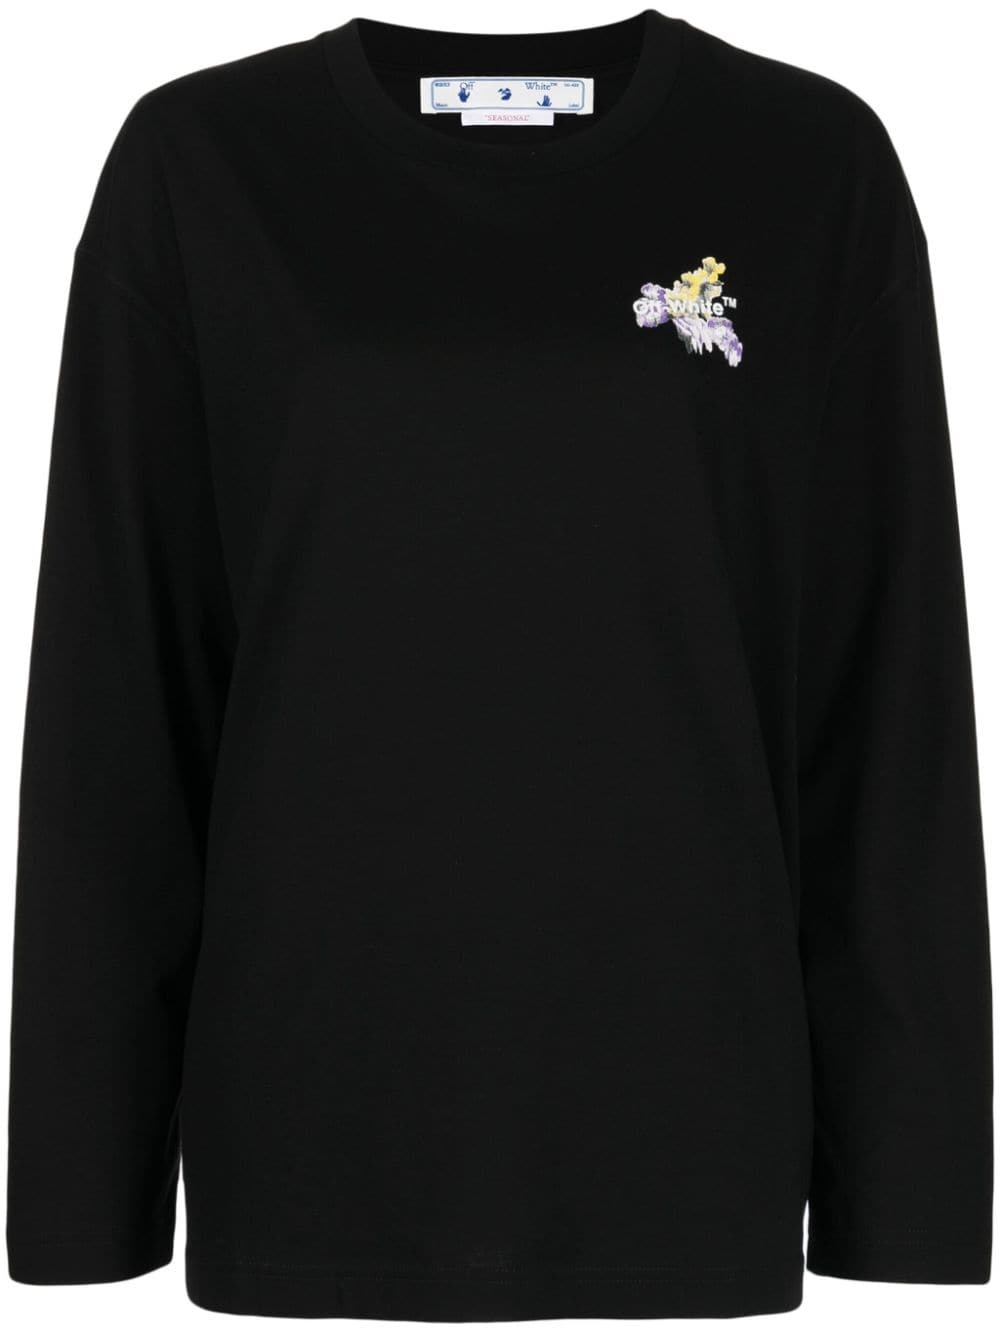 Flower Arrow cotton sweatshirt - 1